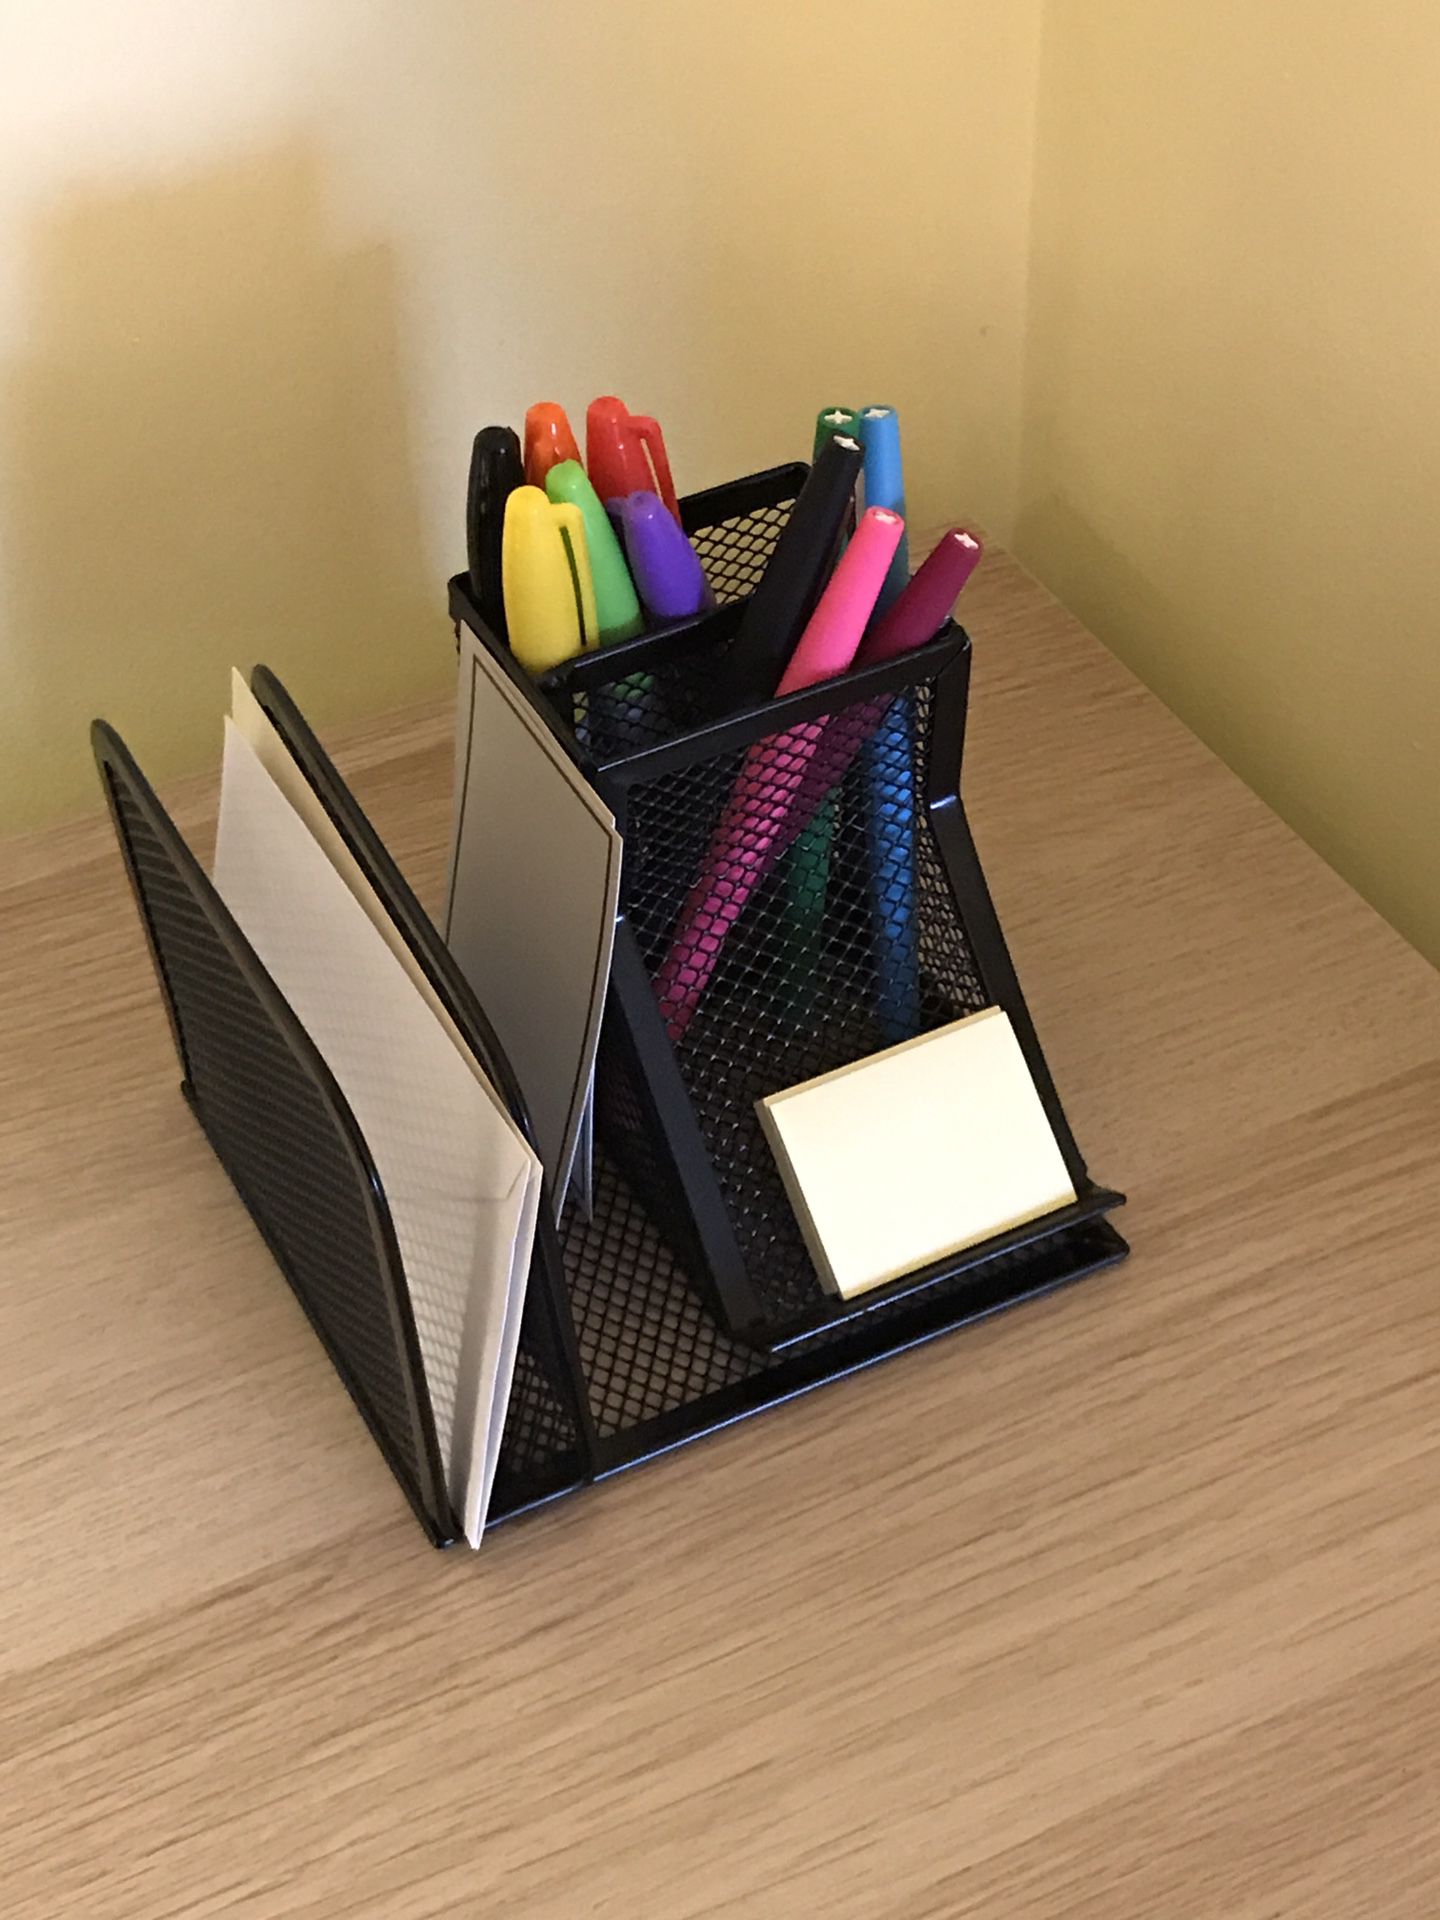 Metal mesh pen/pencil desk organizer